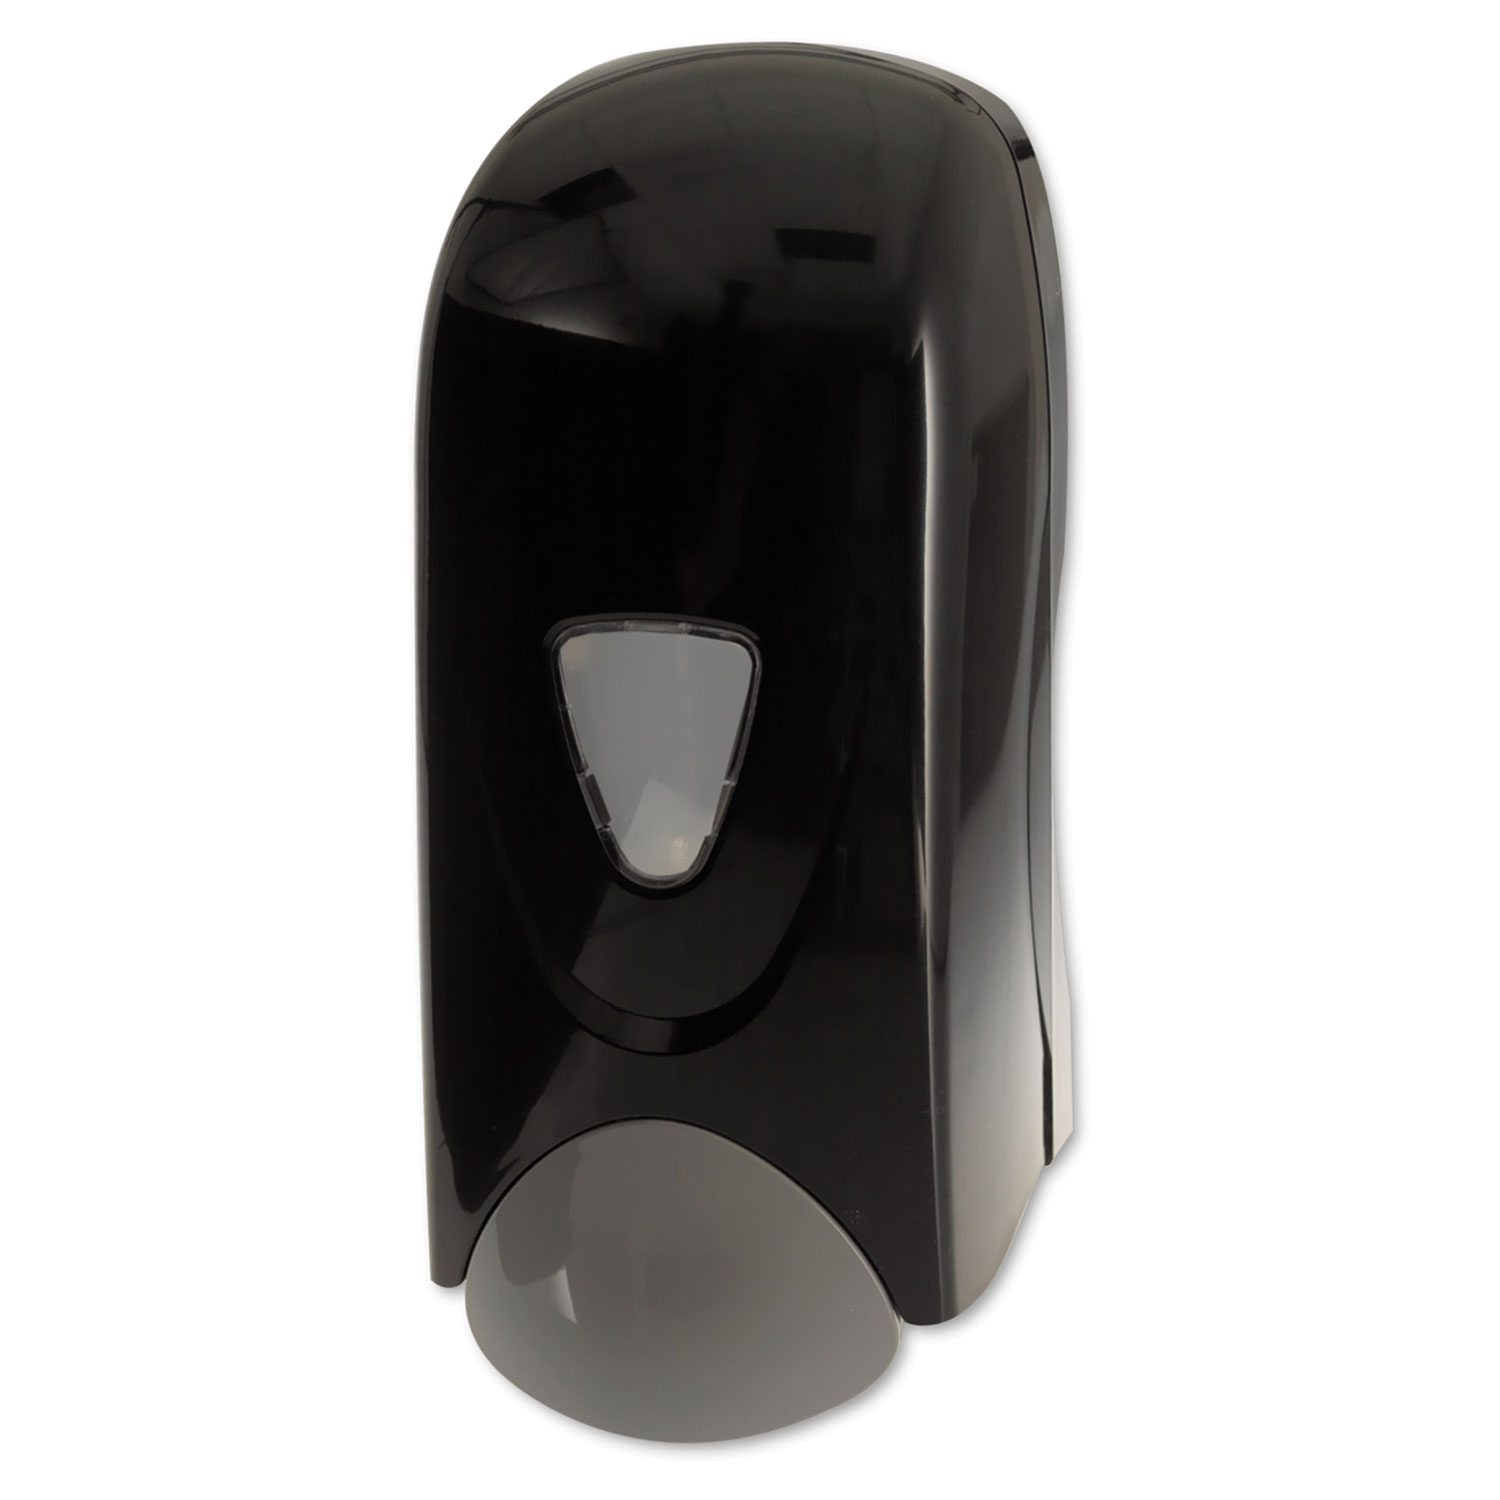  Impact IMP 9326 Foam-eeze Bulk Foam Soap Dispenser with Refillable Bottle, 1000 mL, 4.88 x 4.75 x 11, Black/Gray (IMP9326) 